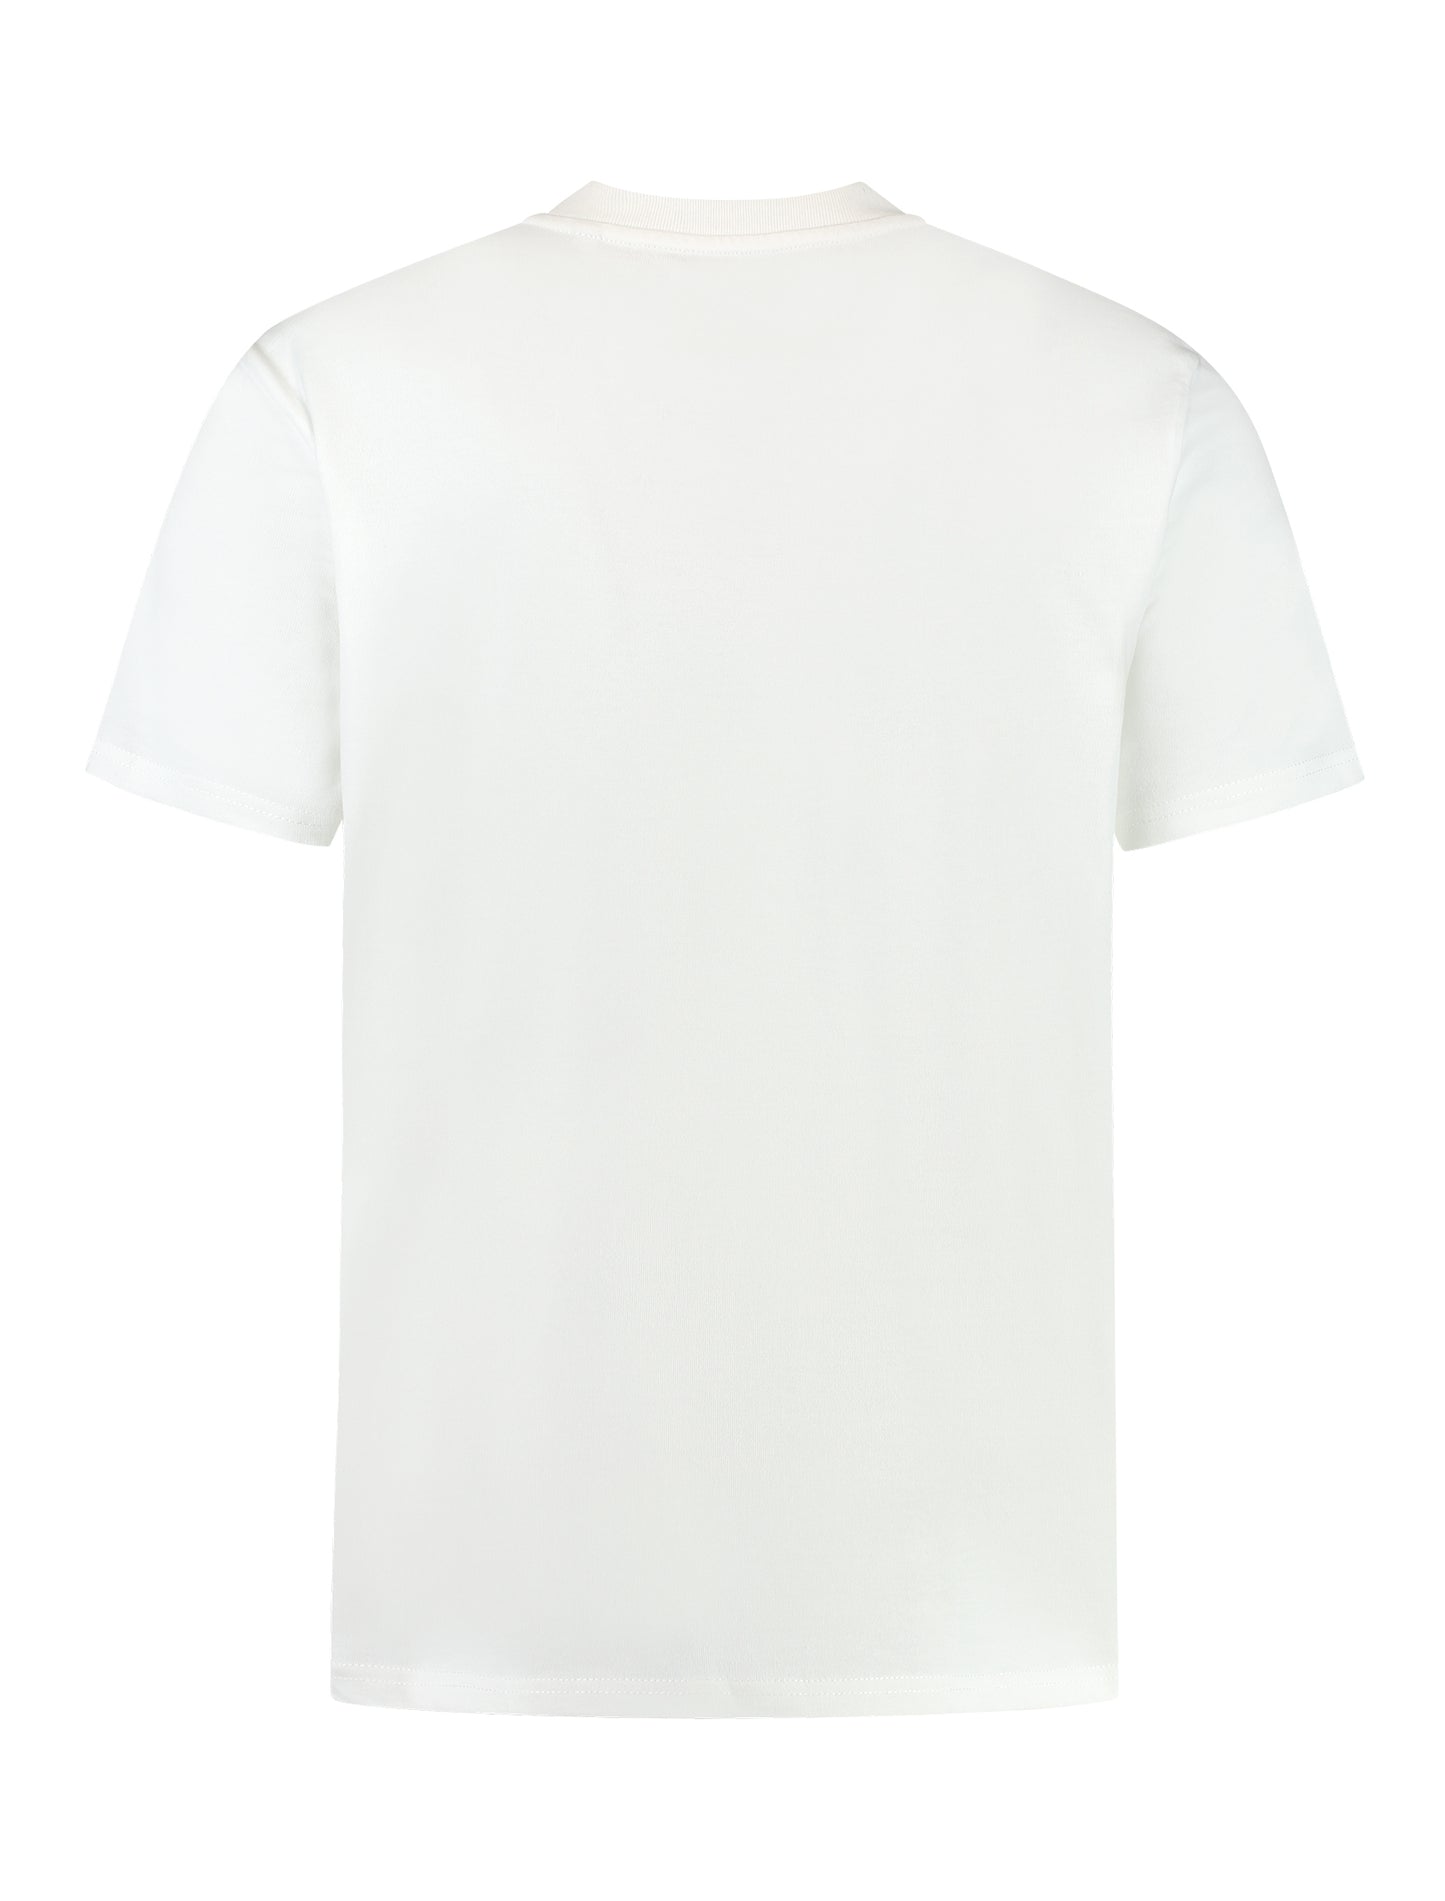 PURE PATH | Desert Mirage T-Shirt - White